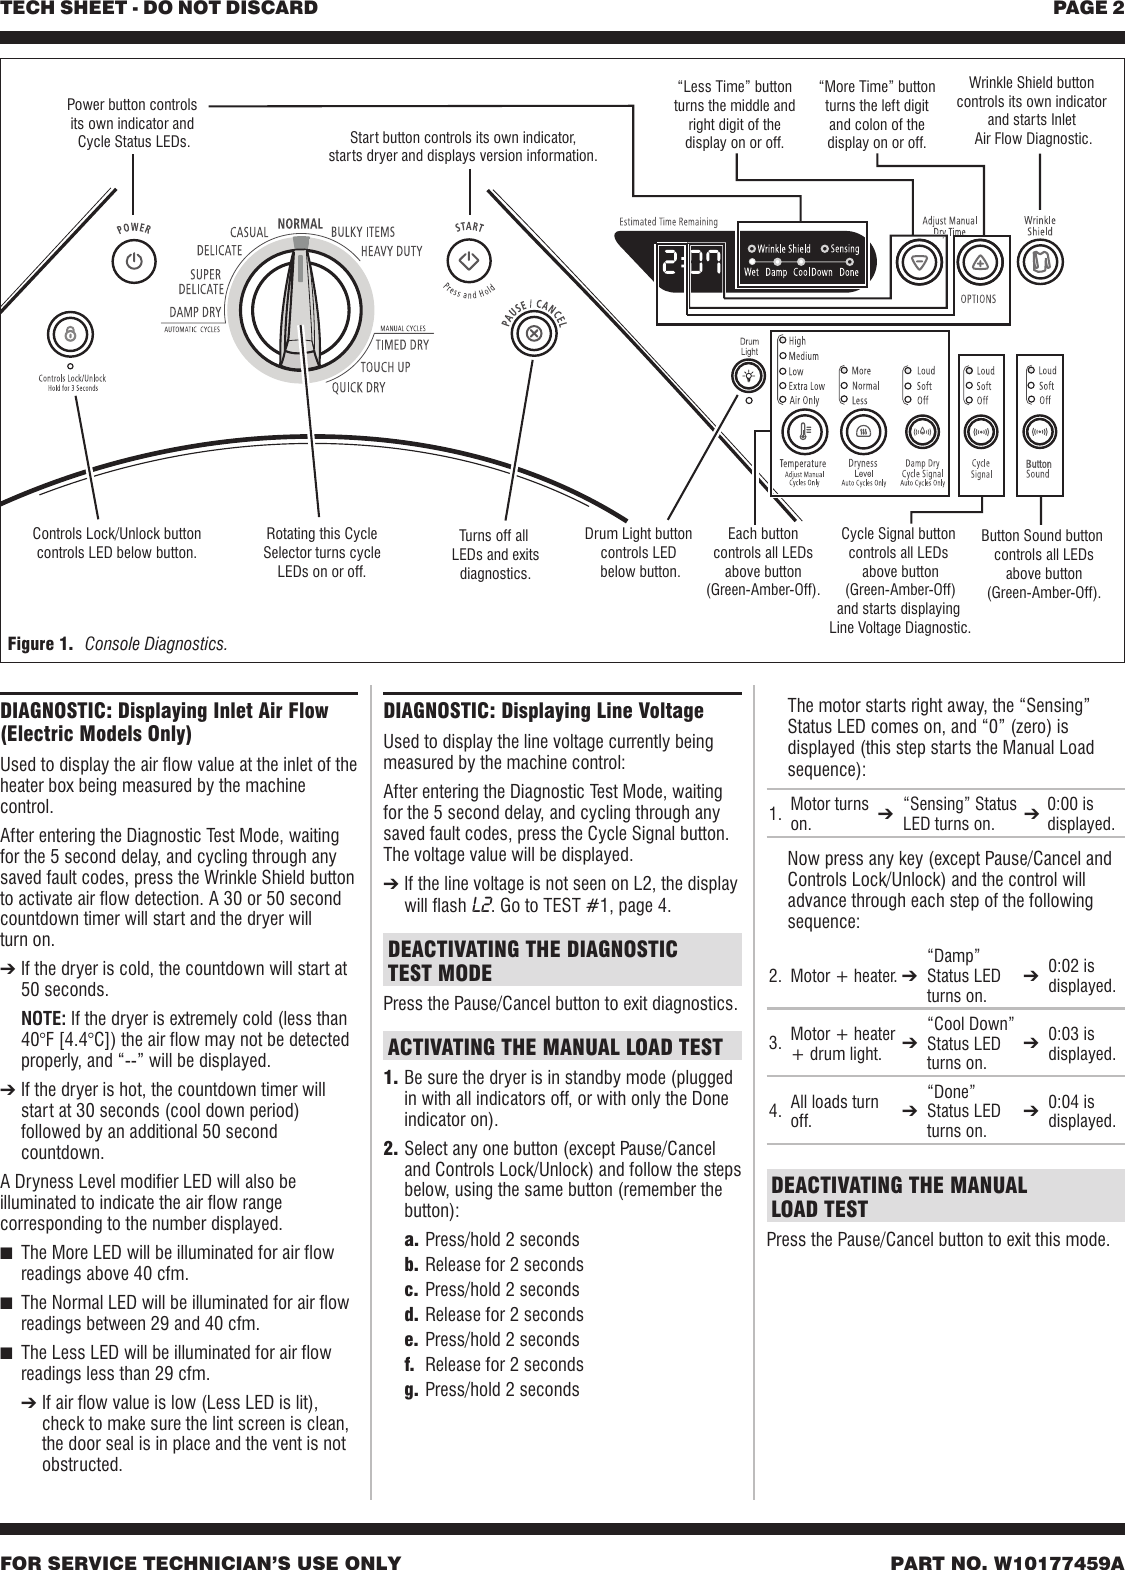 Page 2 of 12 - ZB80281_W10177459A.vp  W10177459A - Whirlpool Duet Sport Dryer Tech Sheet